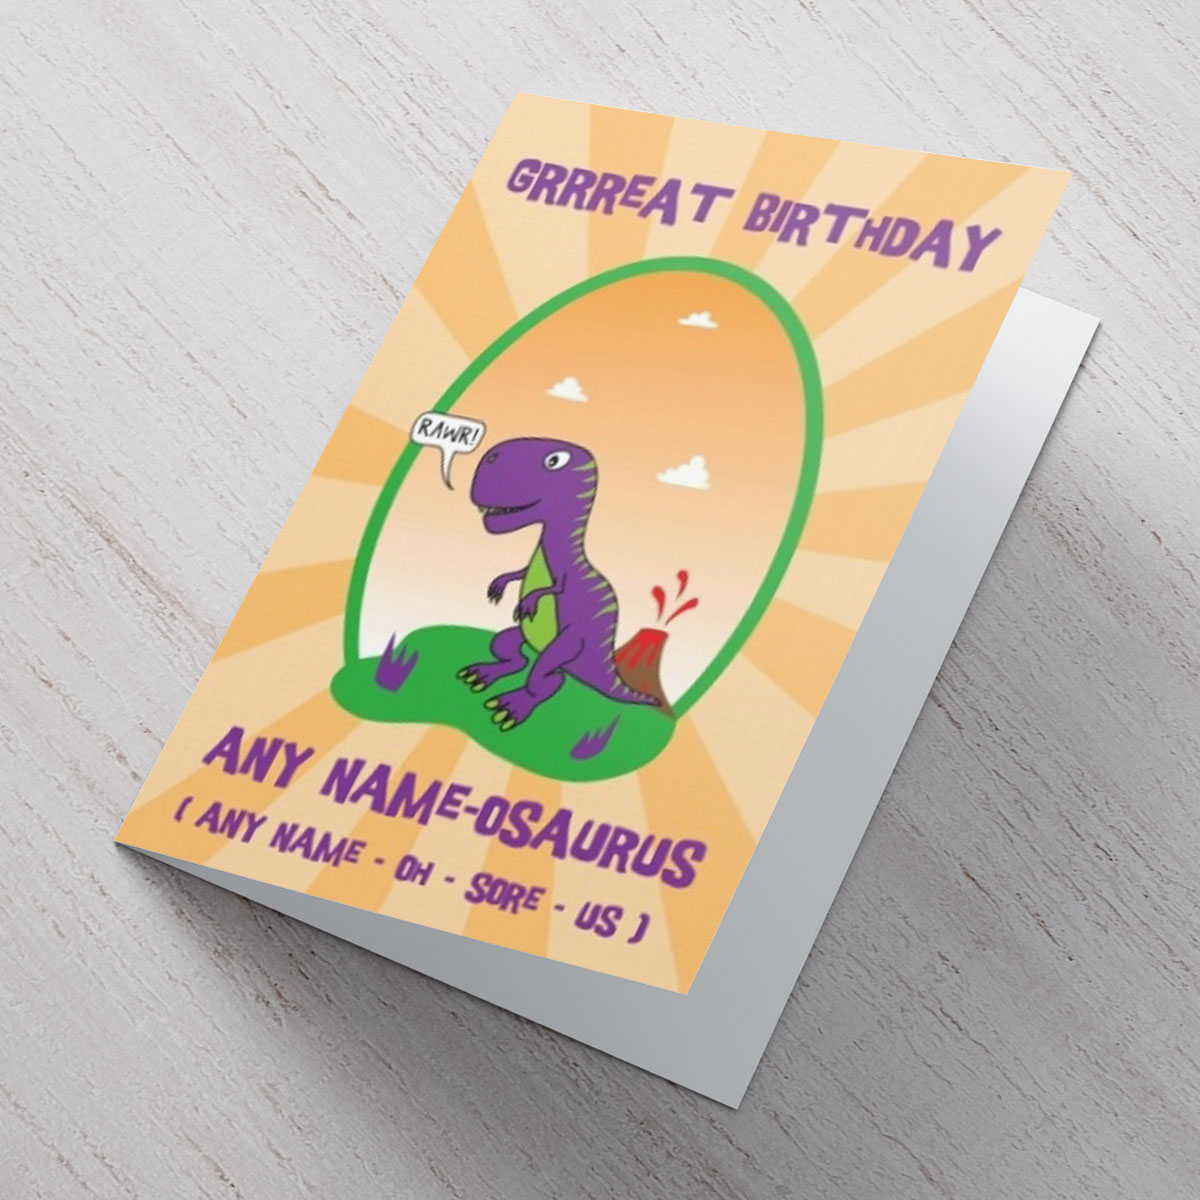 Personalised Card - Grrrreat Birthday